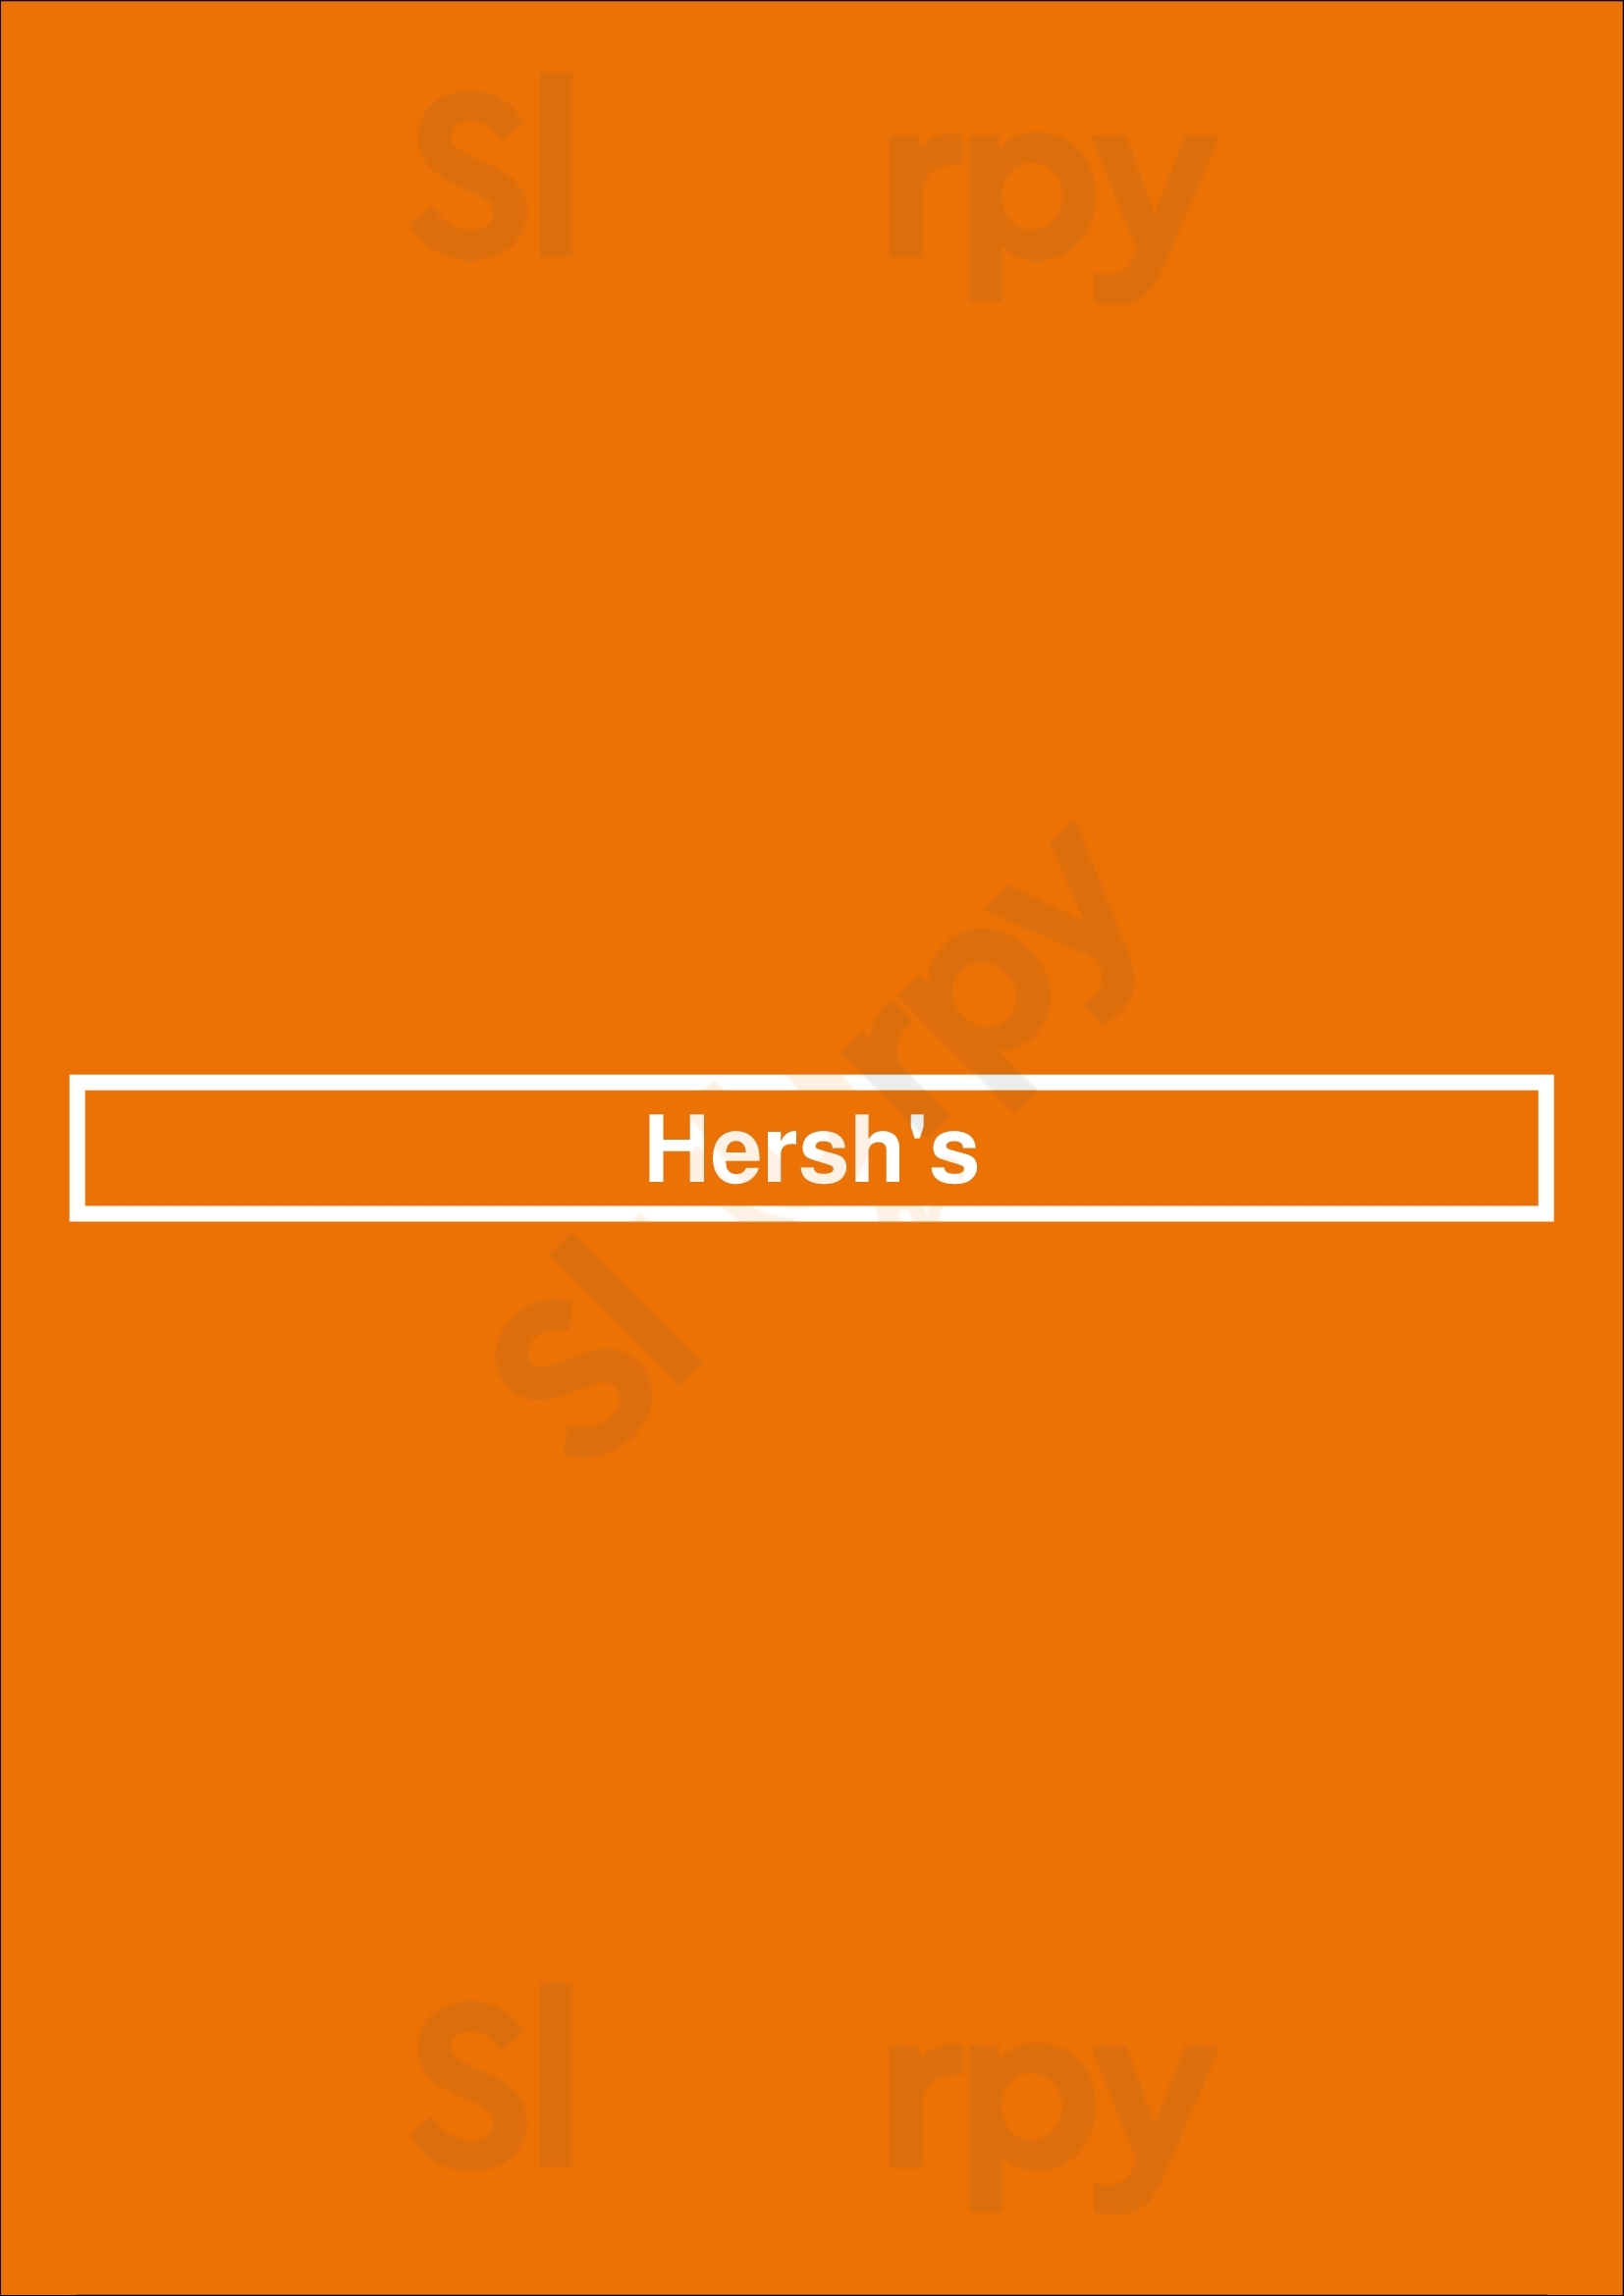 Hersh's Baltimore Menu - 1